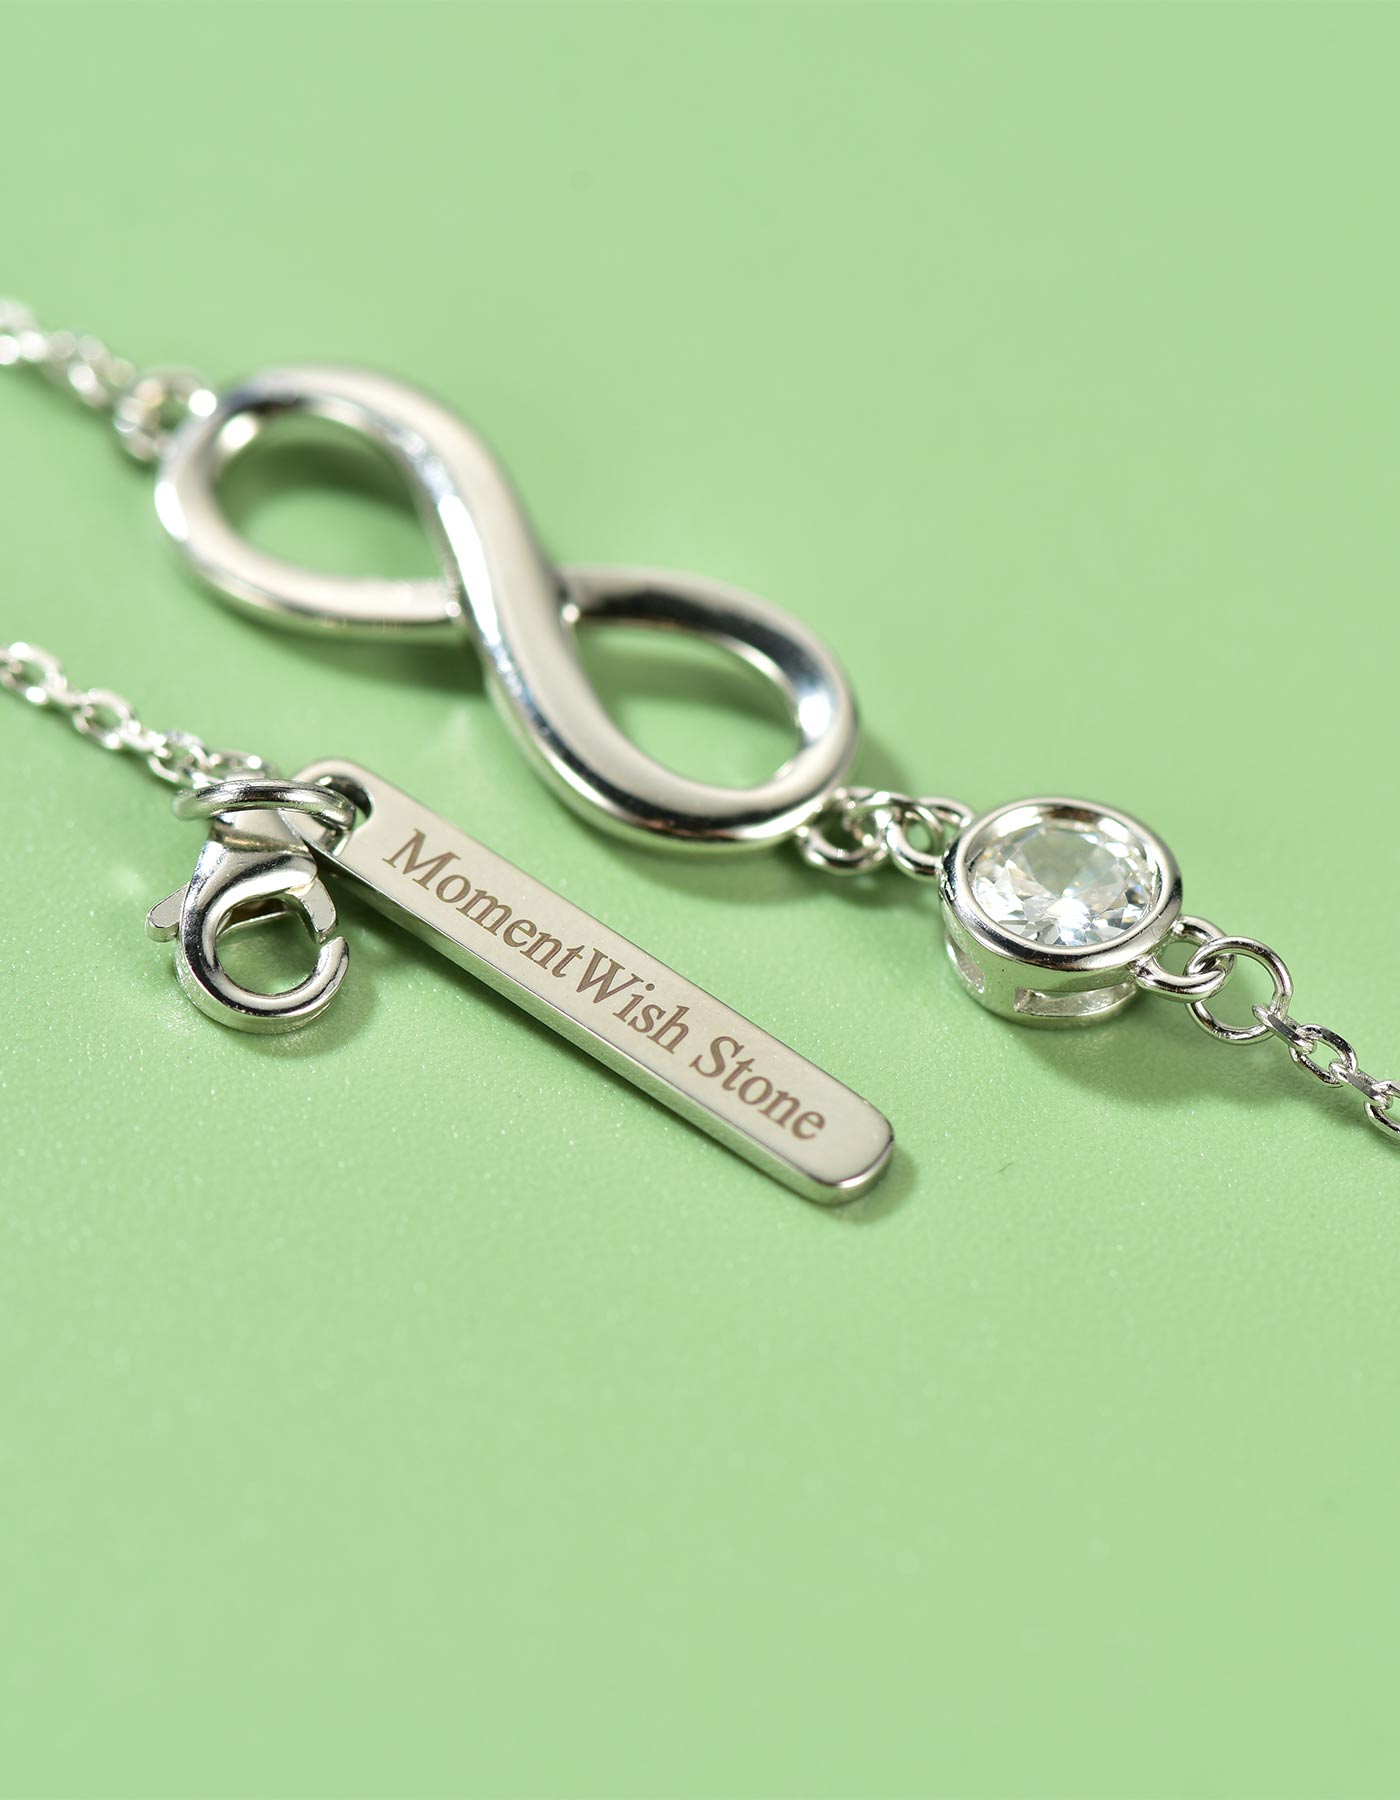 MomentWish Stone Sterling Silver Infinity Bracelet For Women